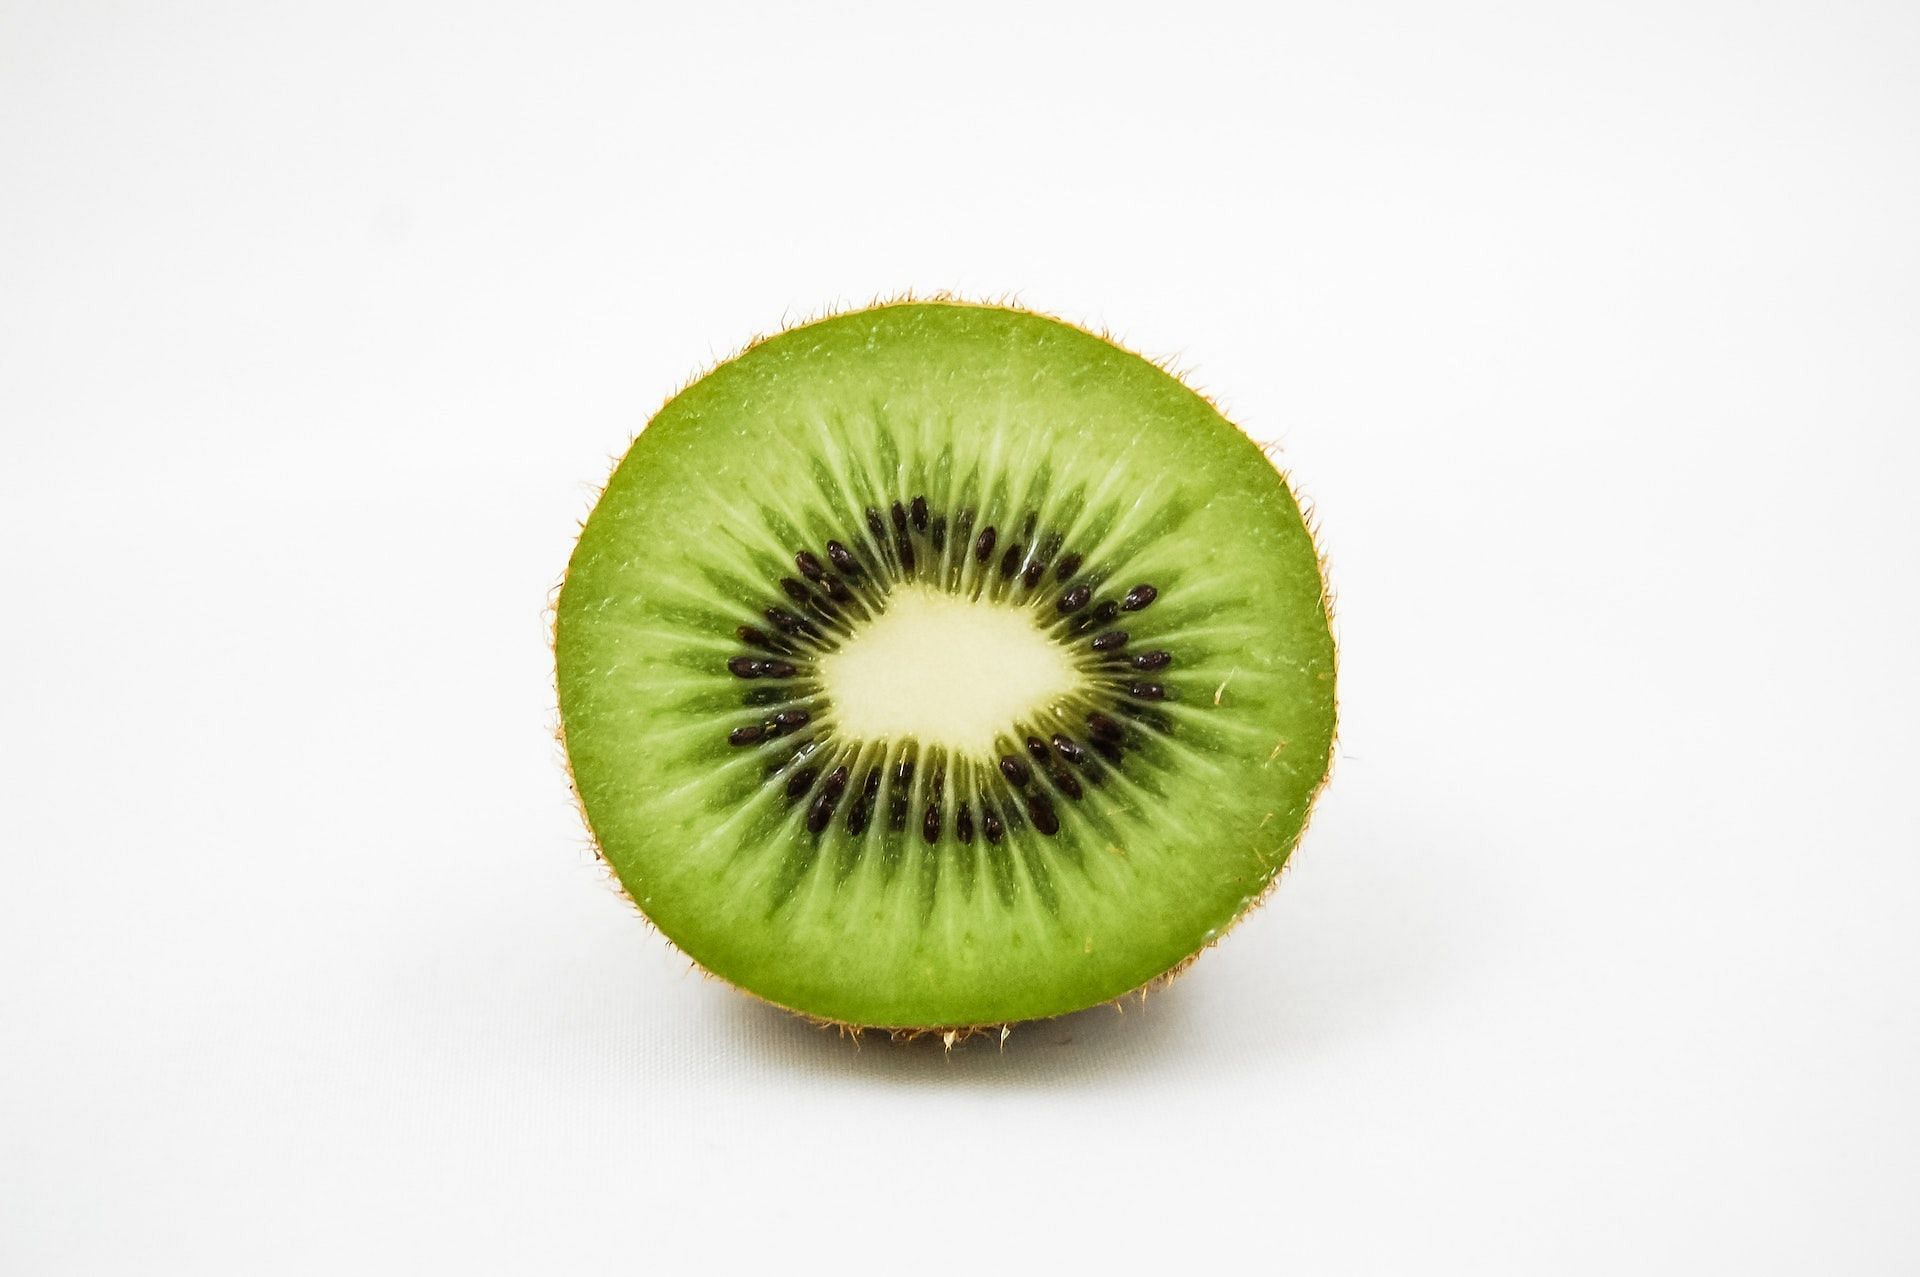 Kiwis are nutritious low-calorie fruits. (Photo via Pexels/Pixabay)